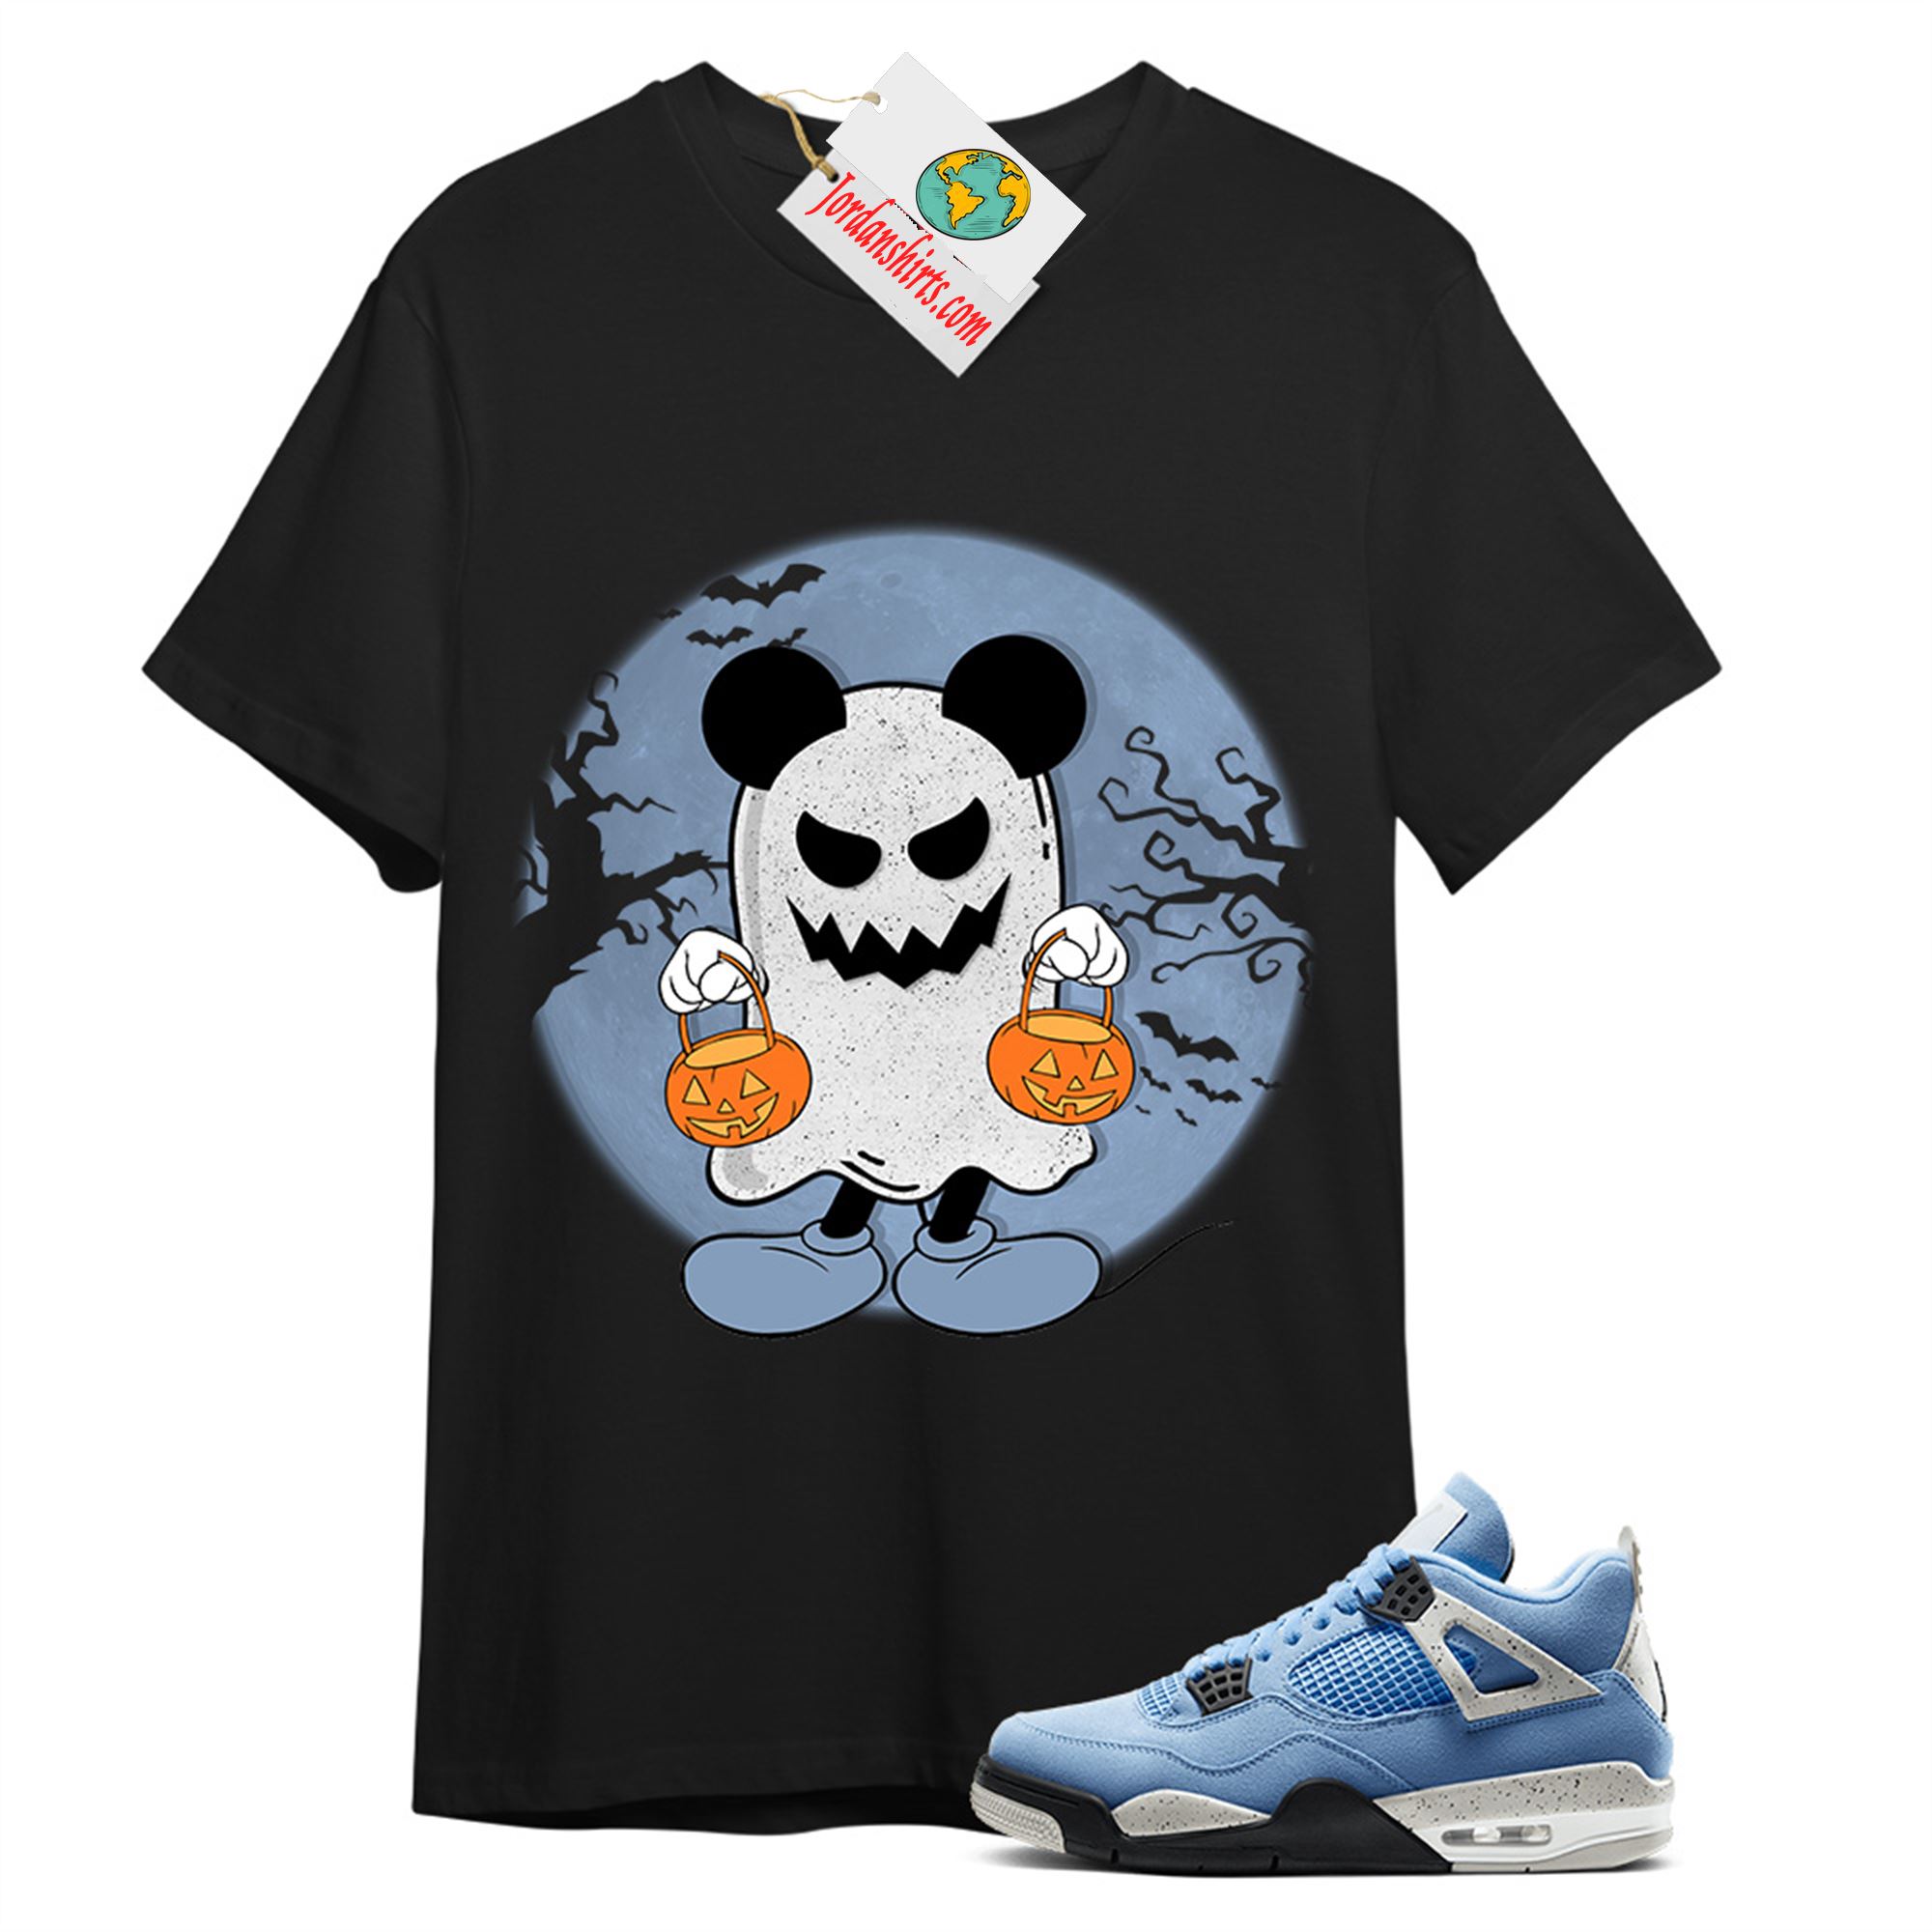 Jordan 4 Shirt, Halloween Mickey Ghost Black T-shirt Air Jordan 4 University Blue 4s Full Size Up To 5xl